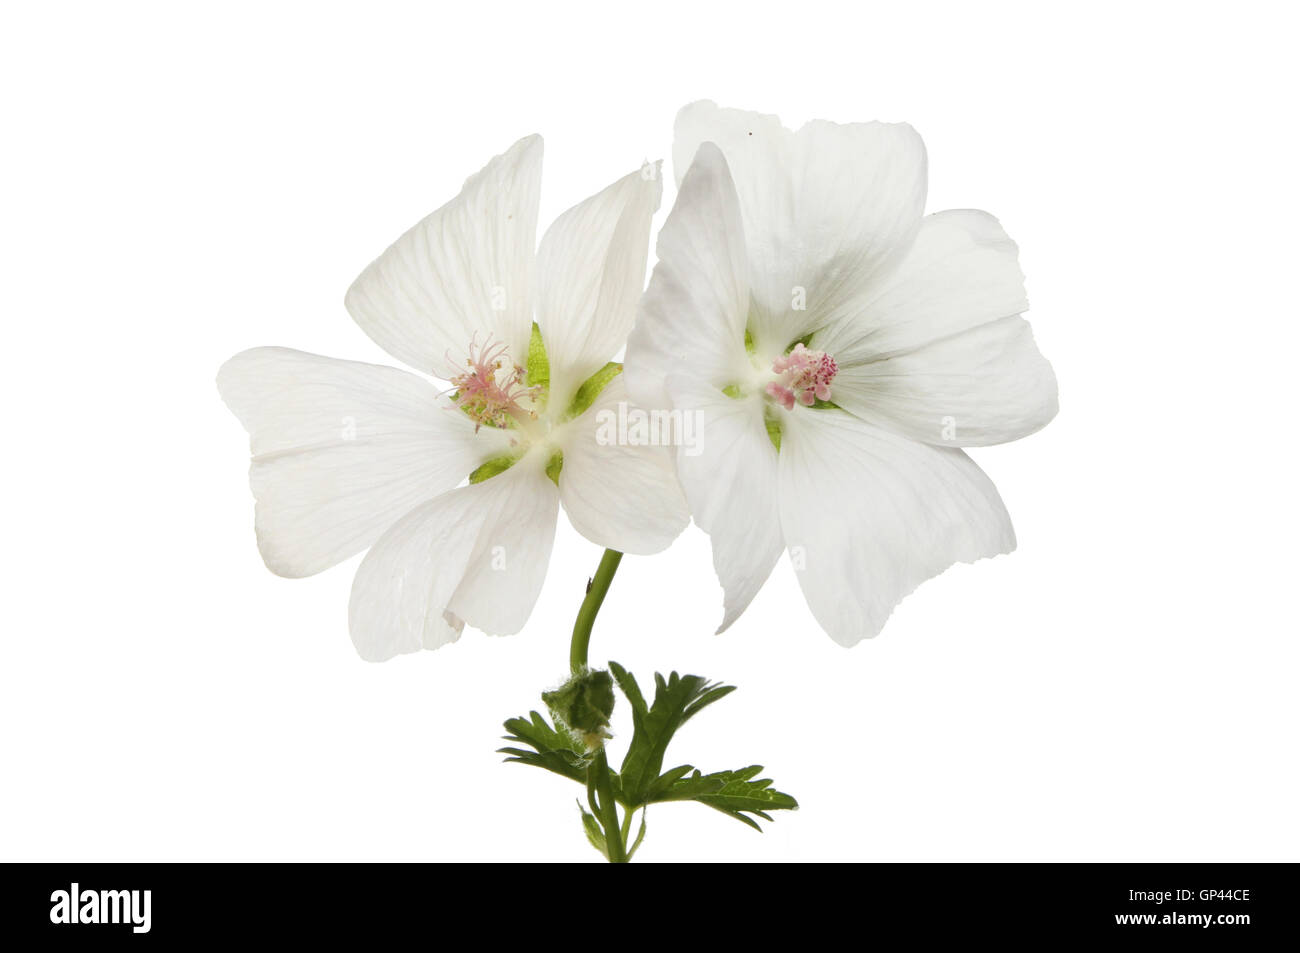 Two white Geranium flowers isolated against white Stock Photo